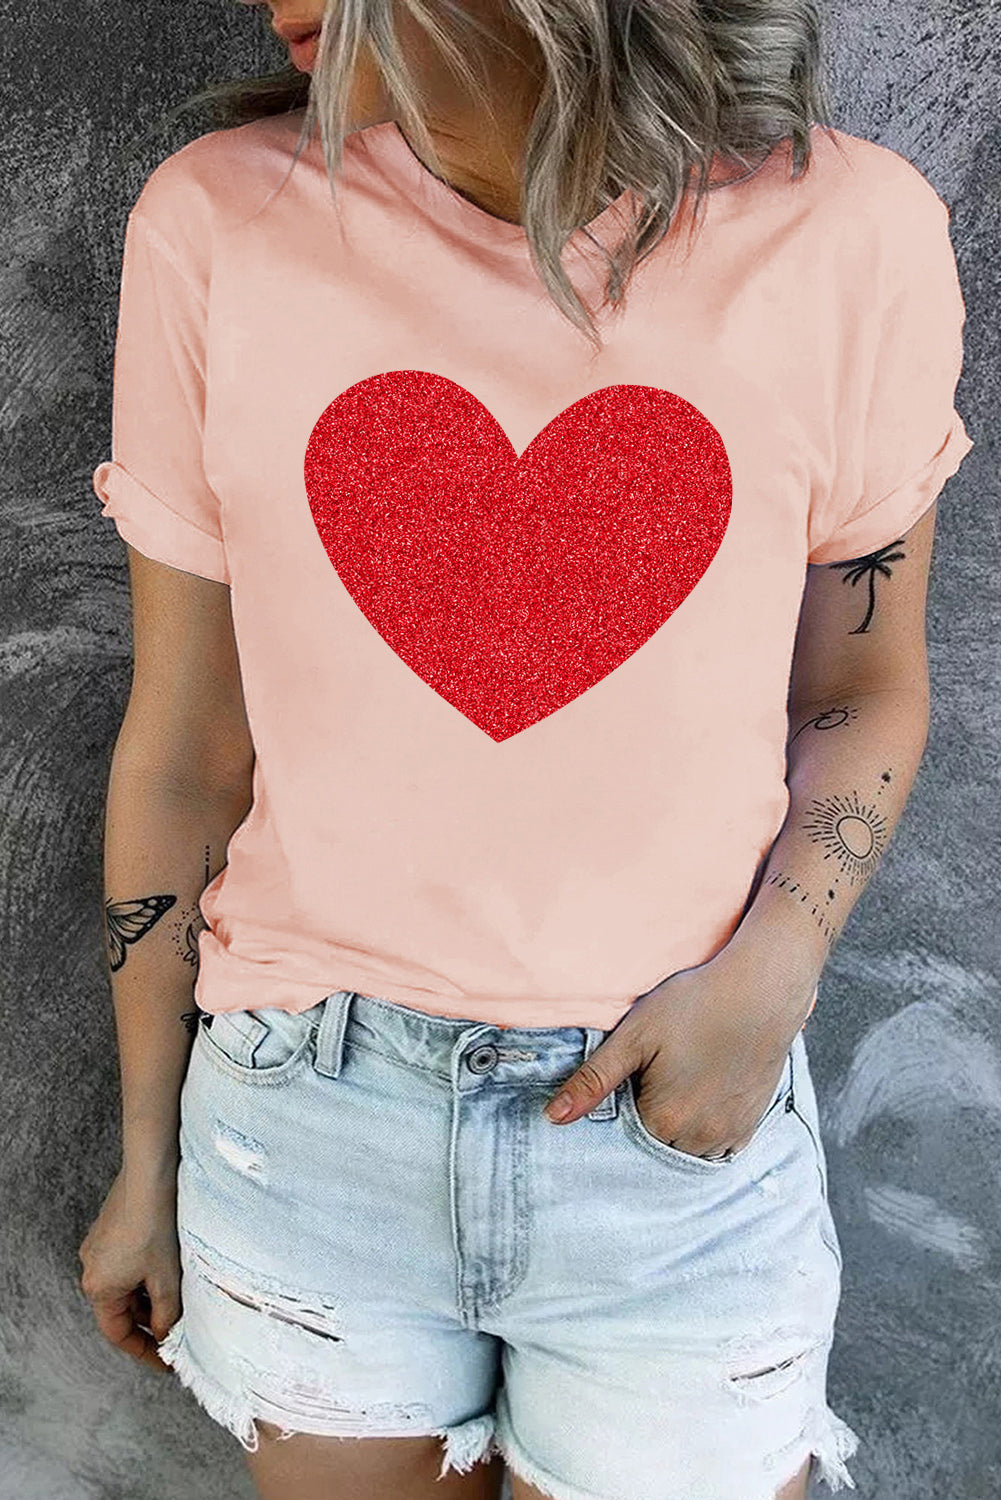 WELL, GLITTER YOUR HEART Graphic T-Shirt